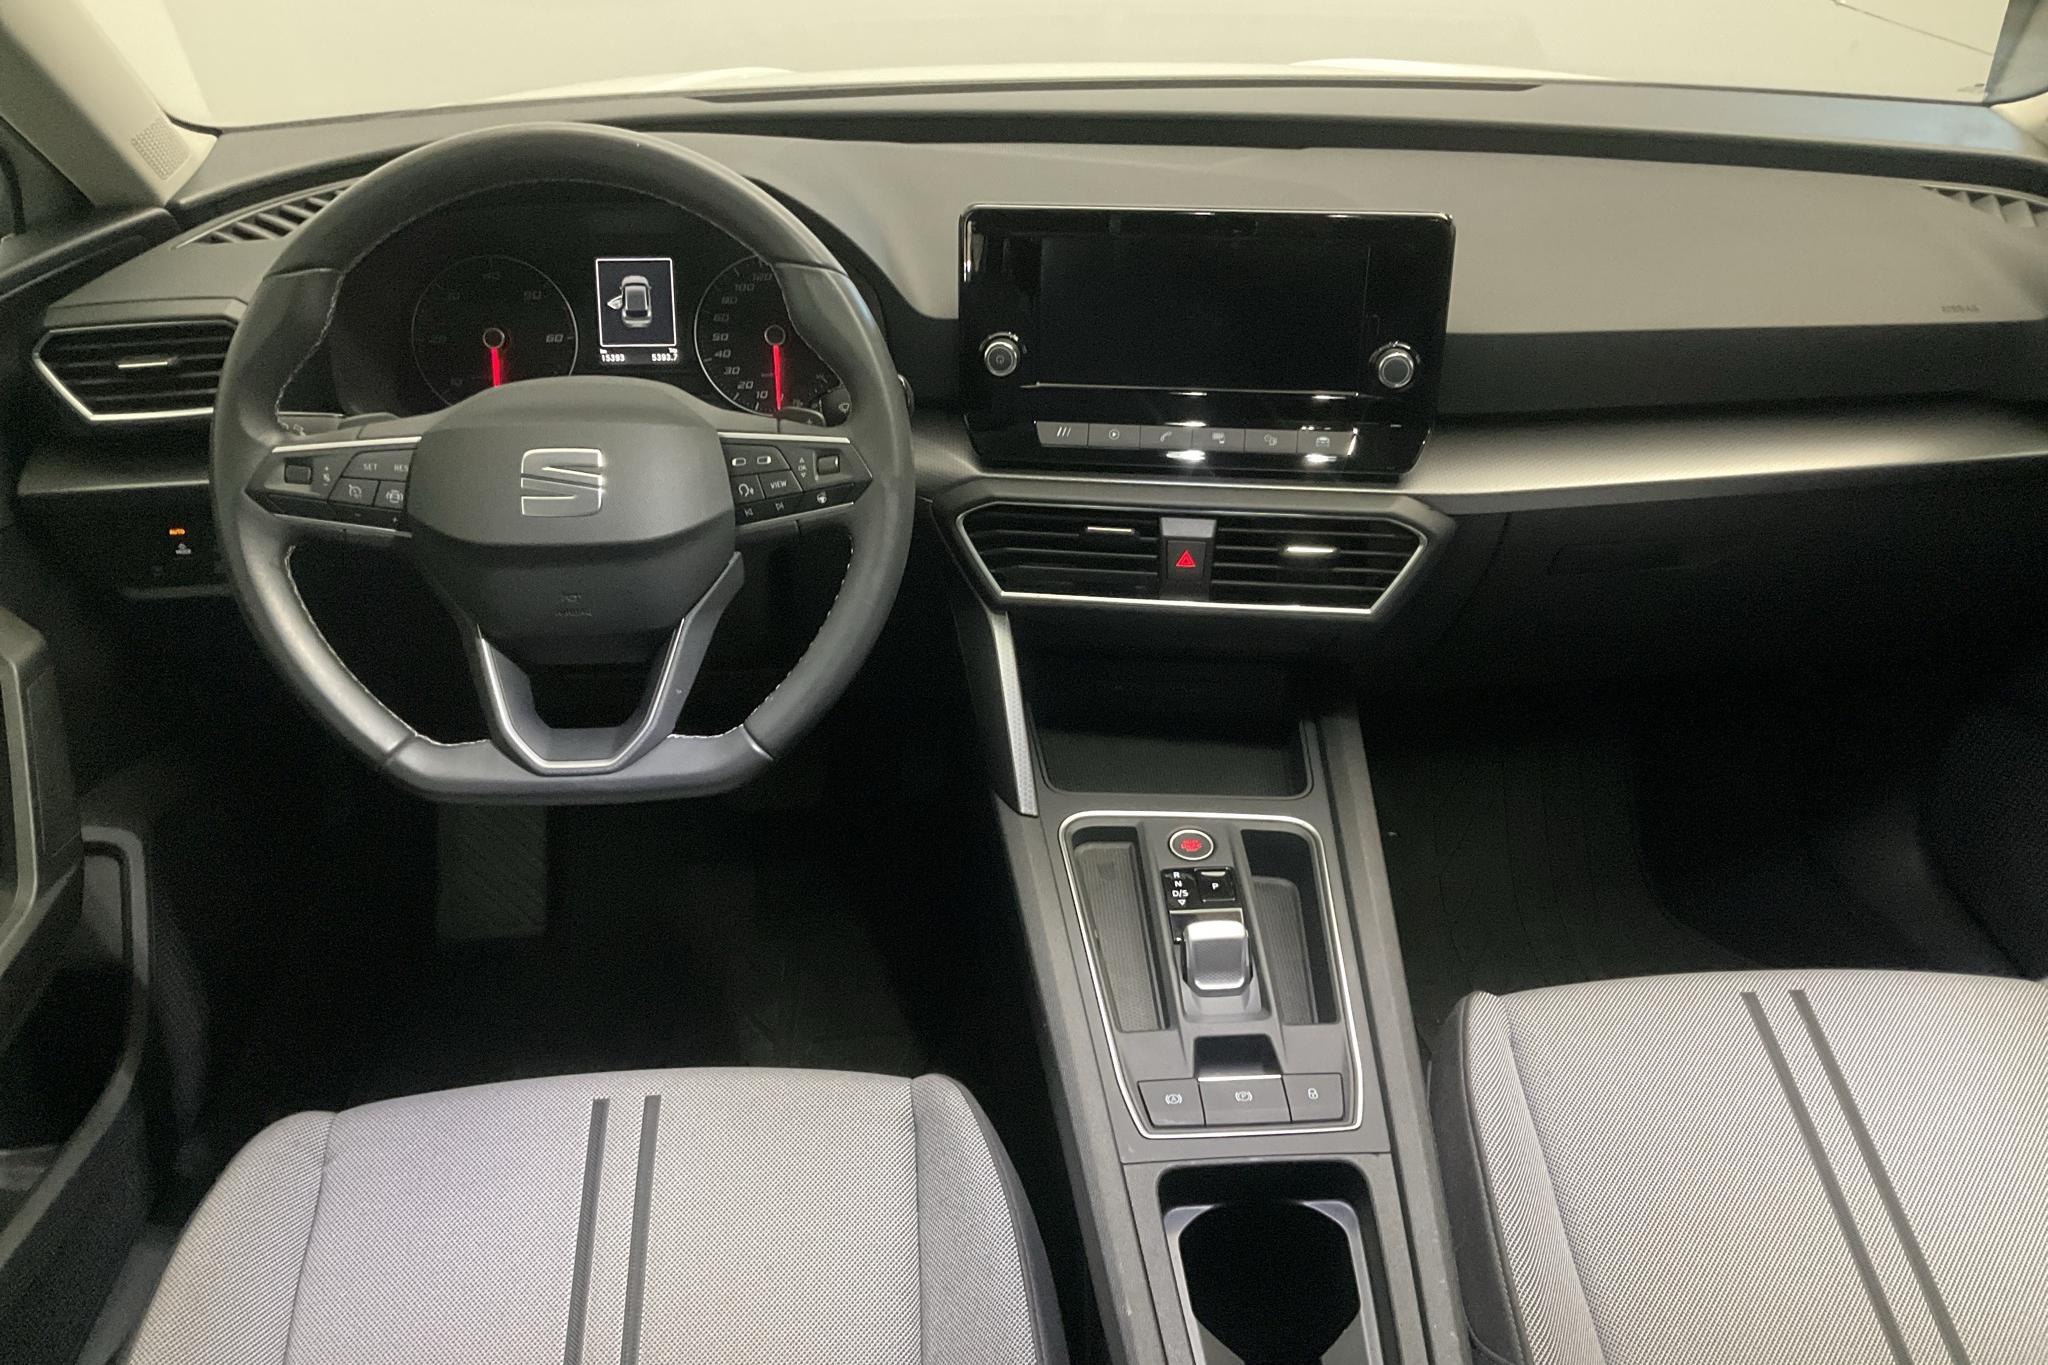 Seat Leon 2.0 TDI 5dr (150hk) - 15 390 km - Automatic - white - 2021